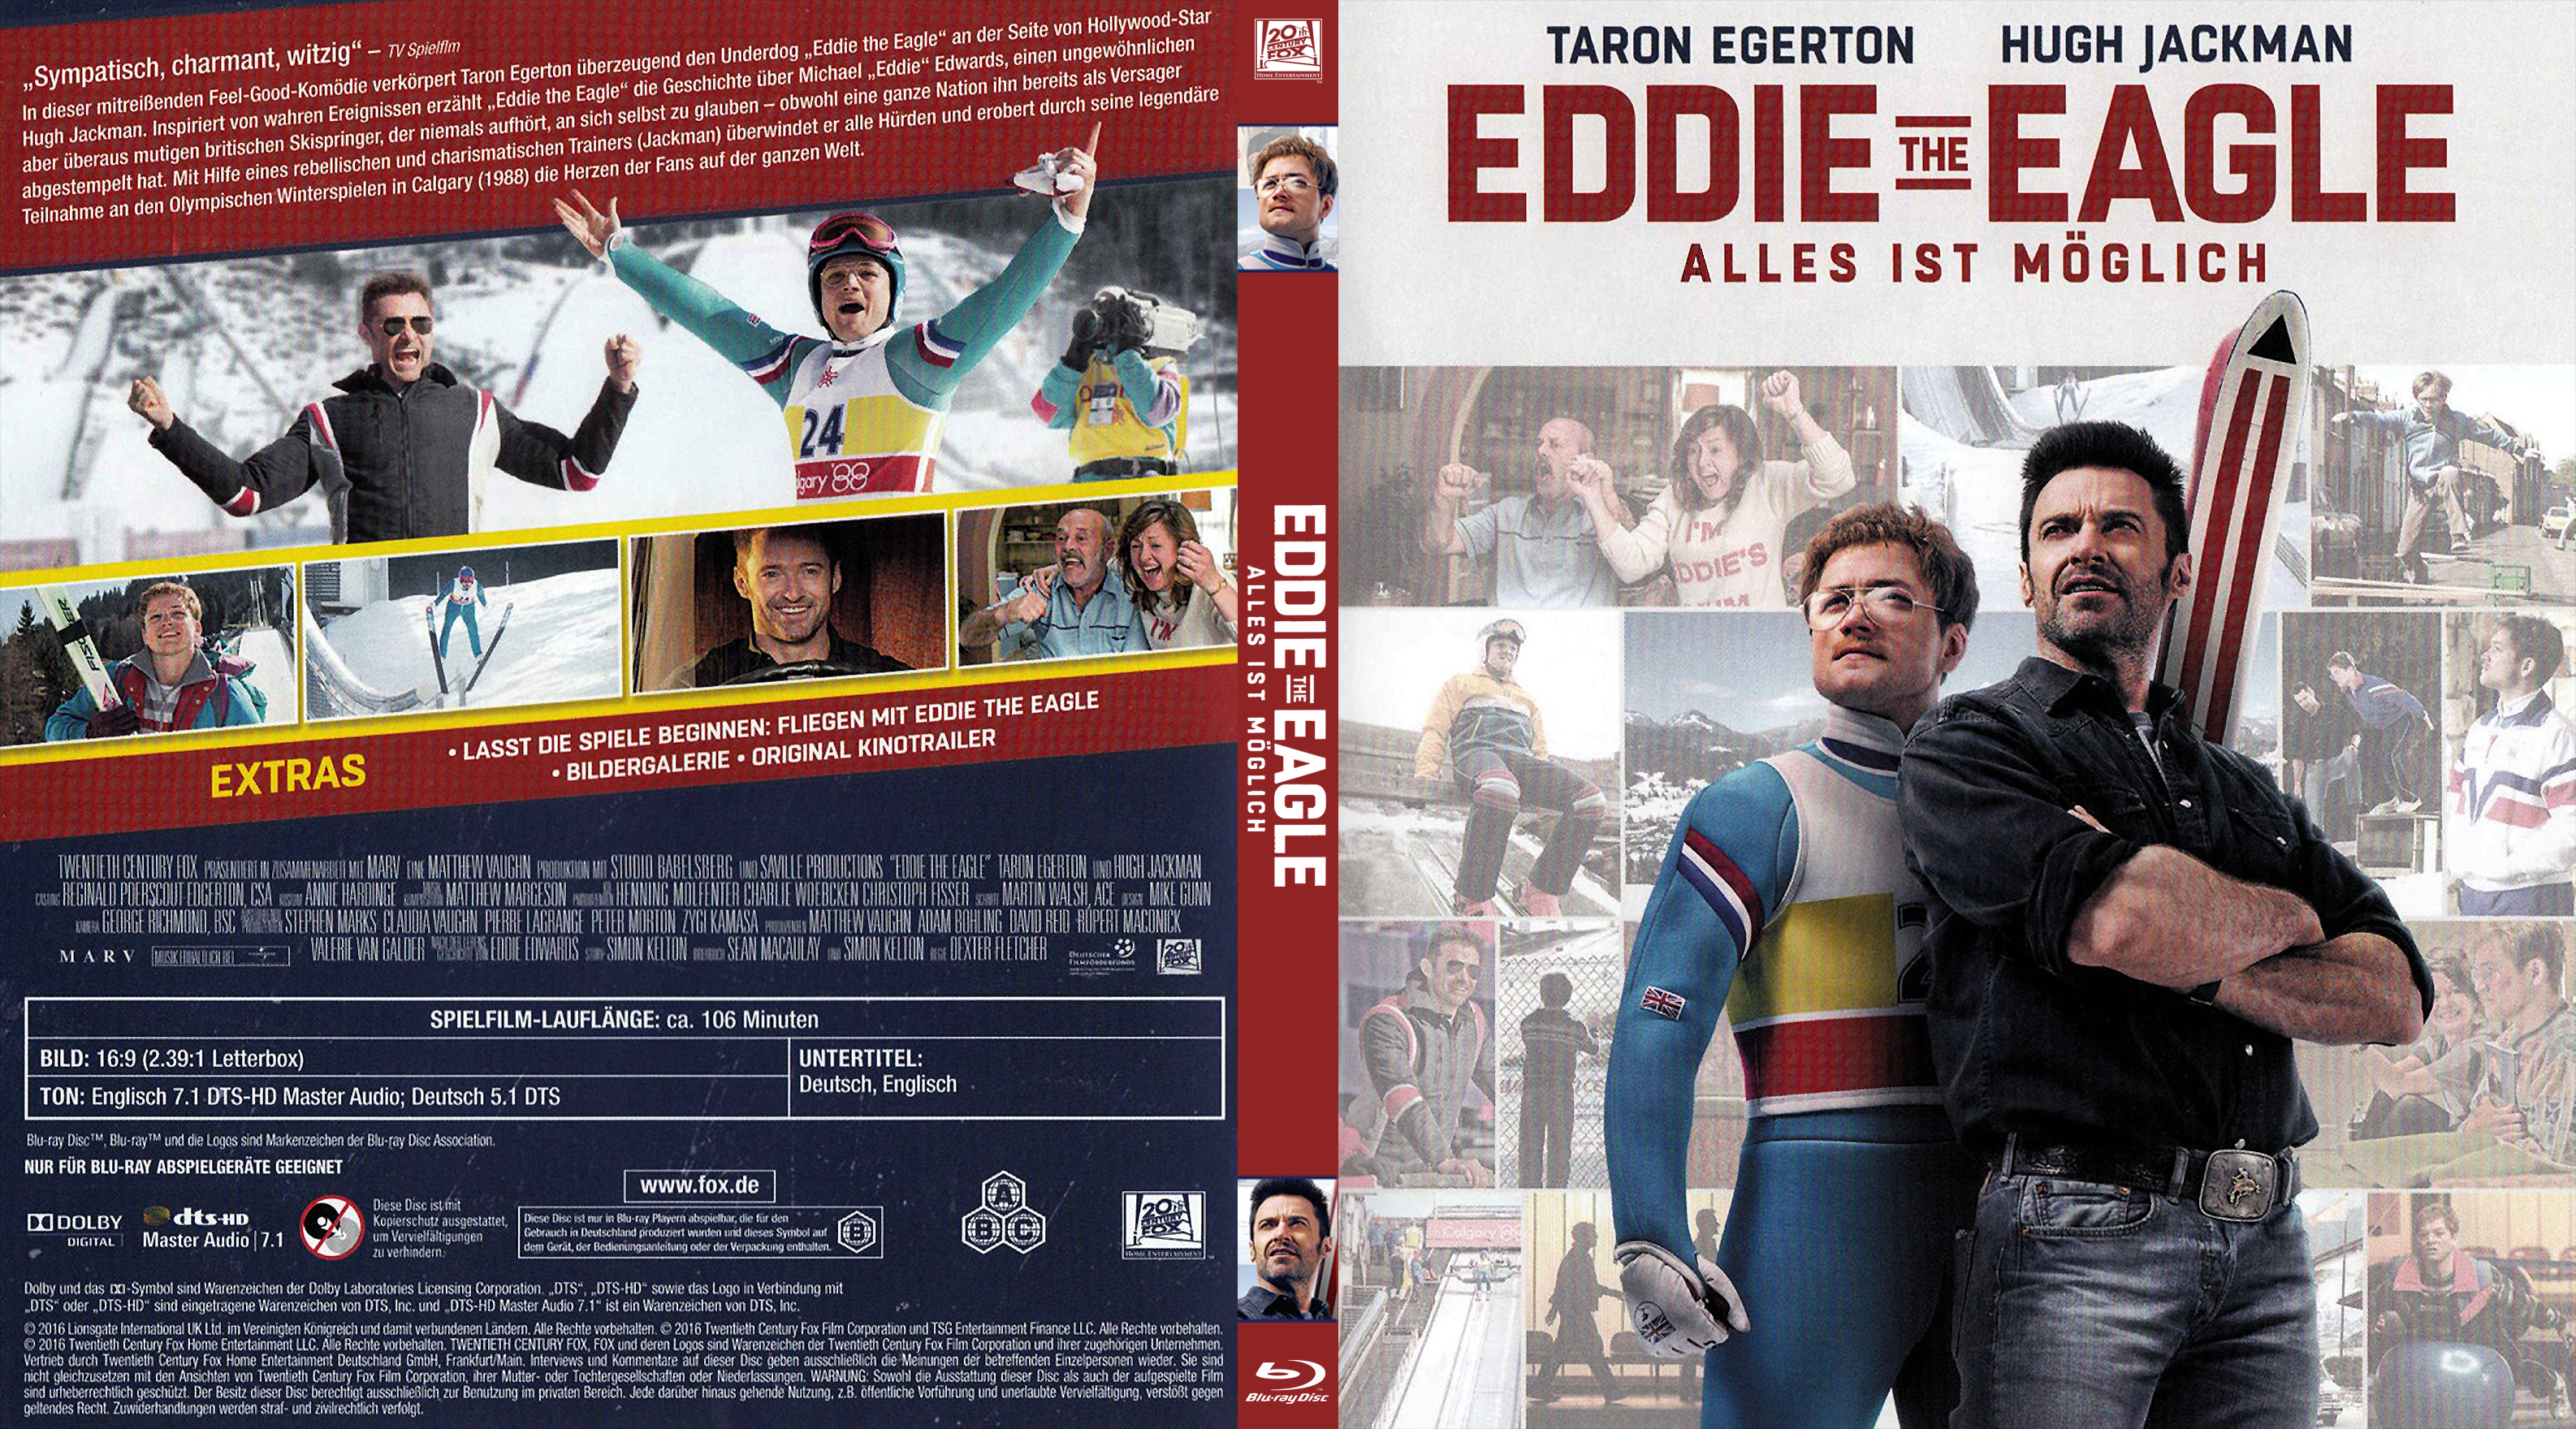 Eagle Eye (2008) Blu ray Cover. Эдди Орел гиф. The Eagle, 2011 DVD Covers. Эдди «Орел» (Blu-ray).